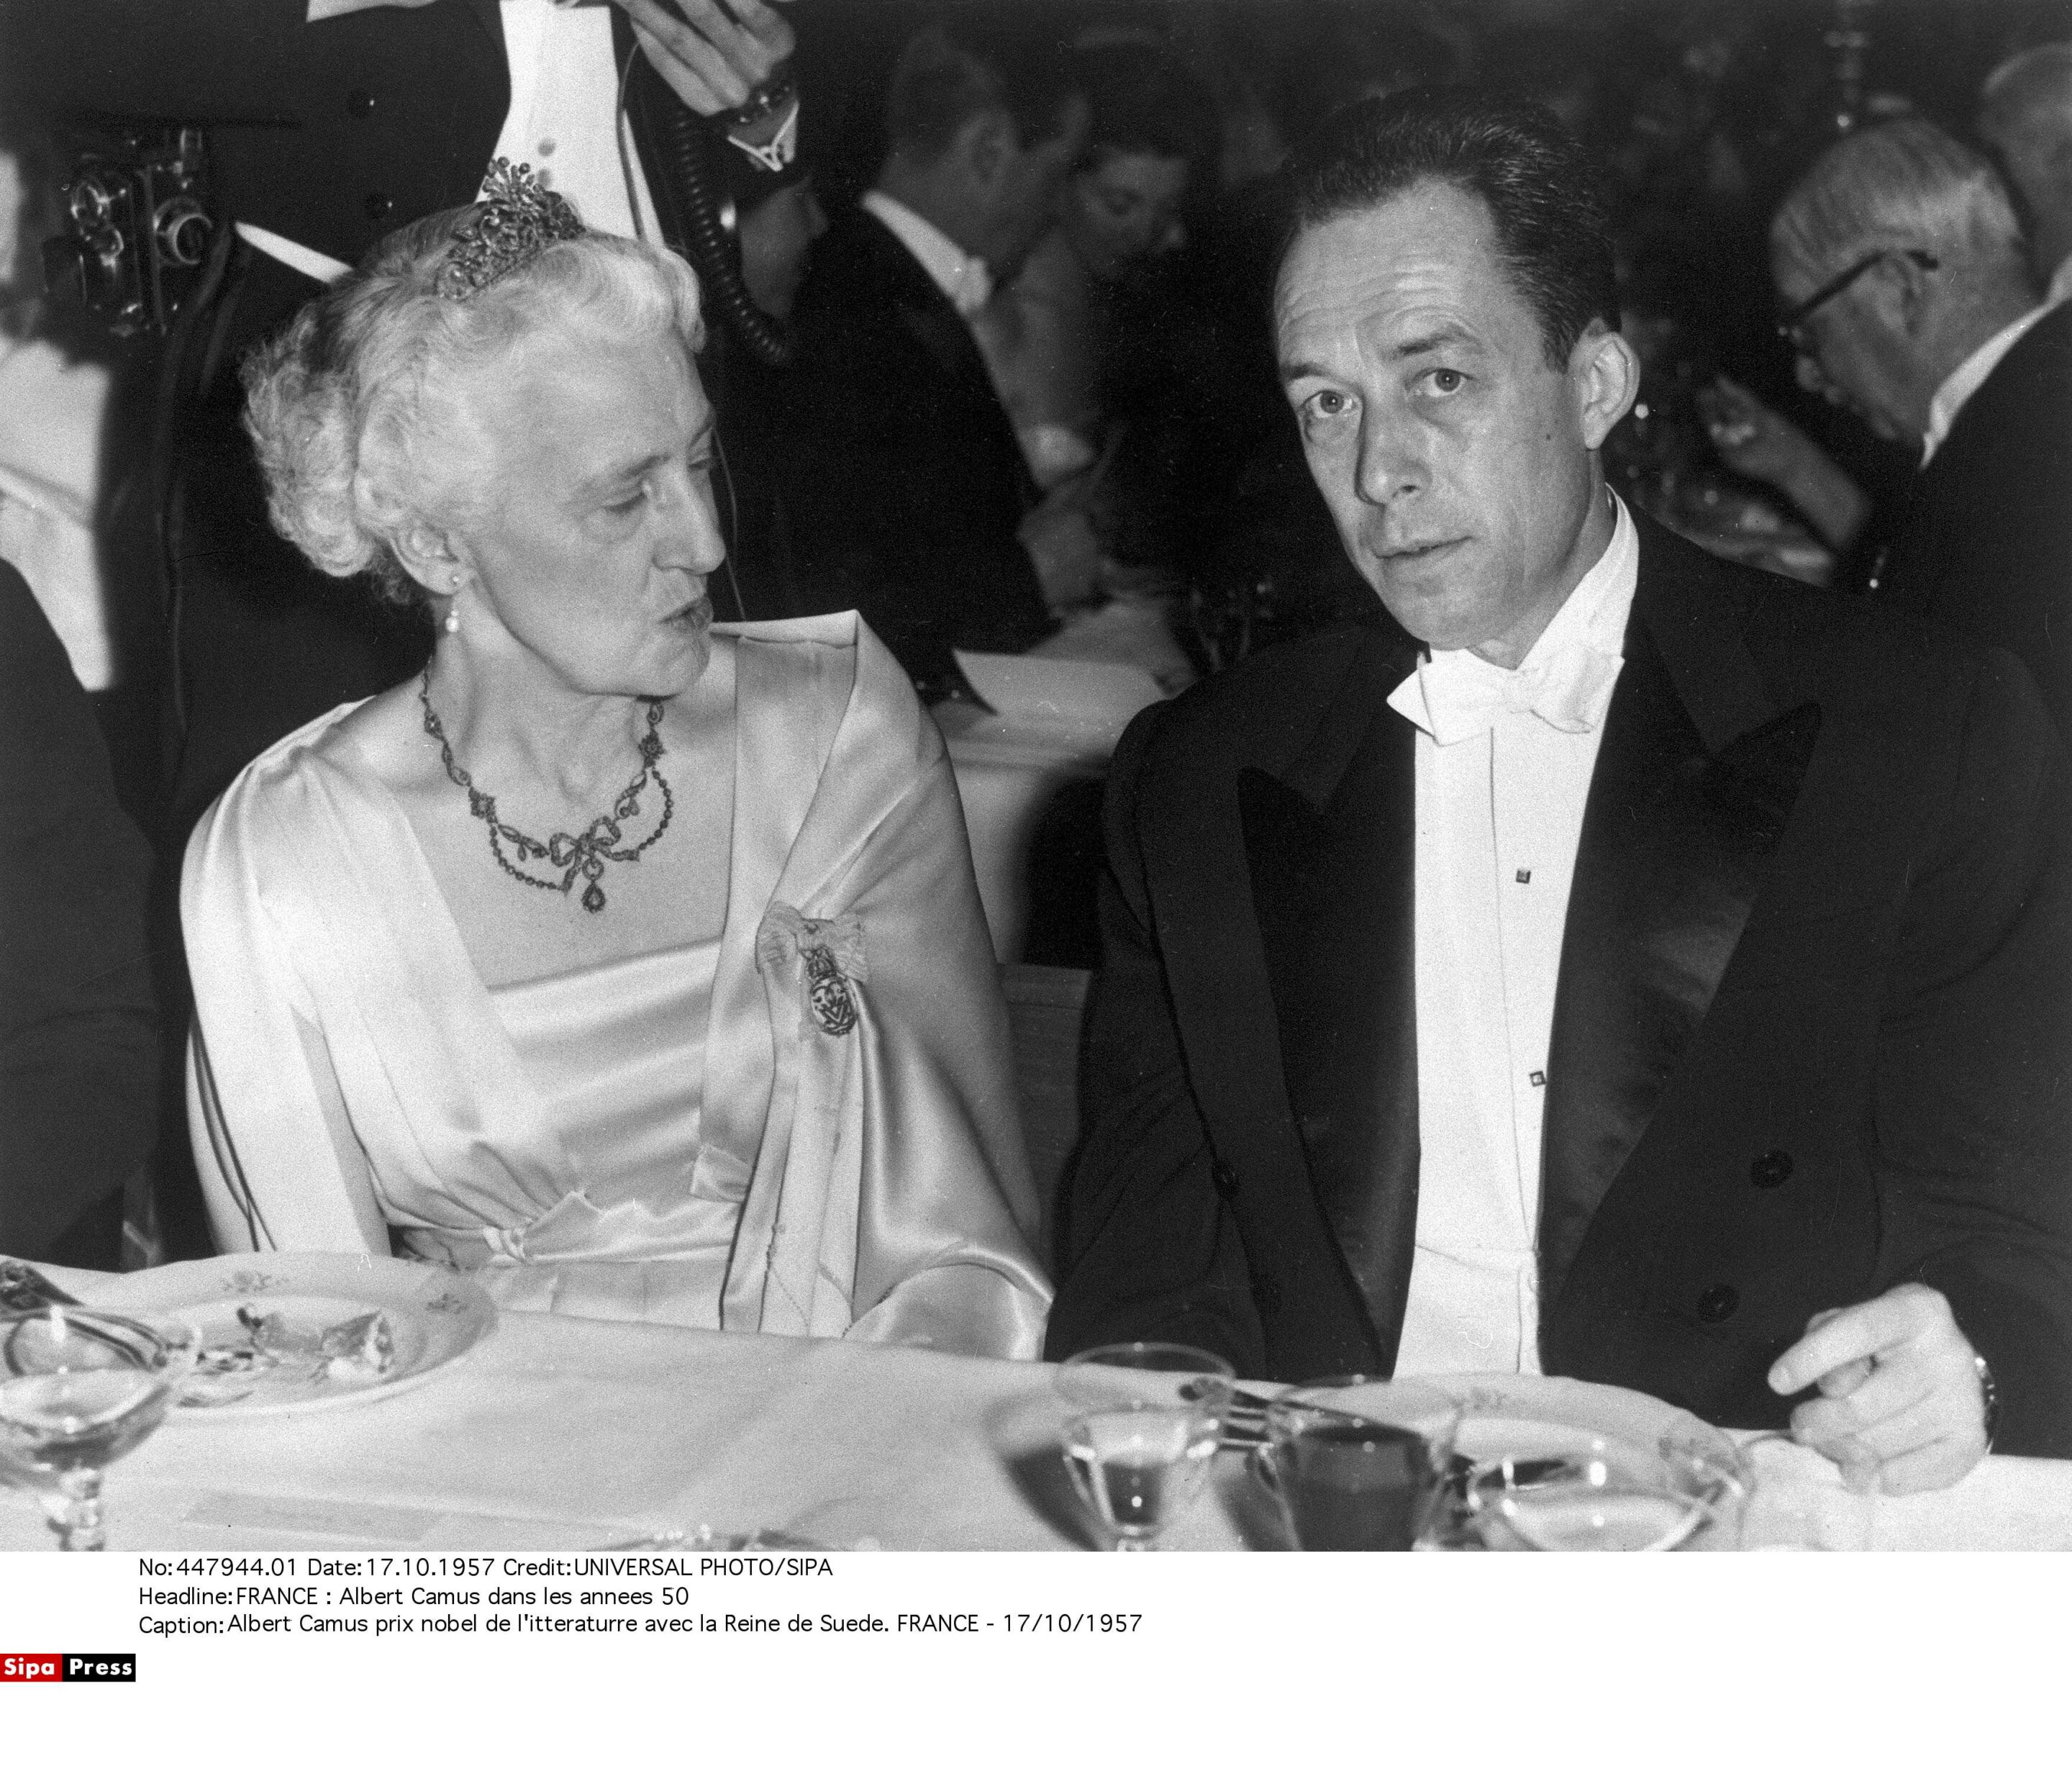 Albert Camus prix nobel de l'itteraturre avec la Reine de Suede. FRANCE - 17/10/1957 (c) Sipa